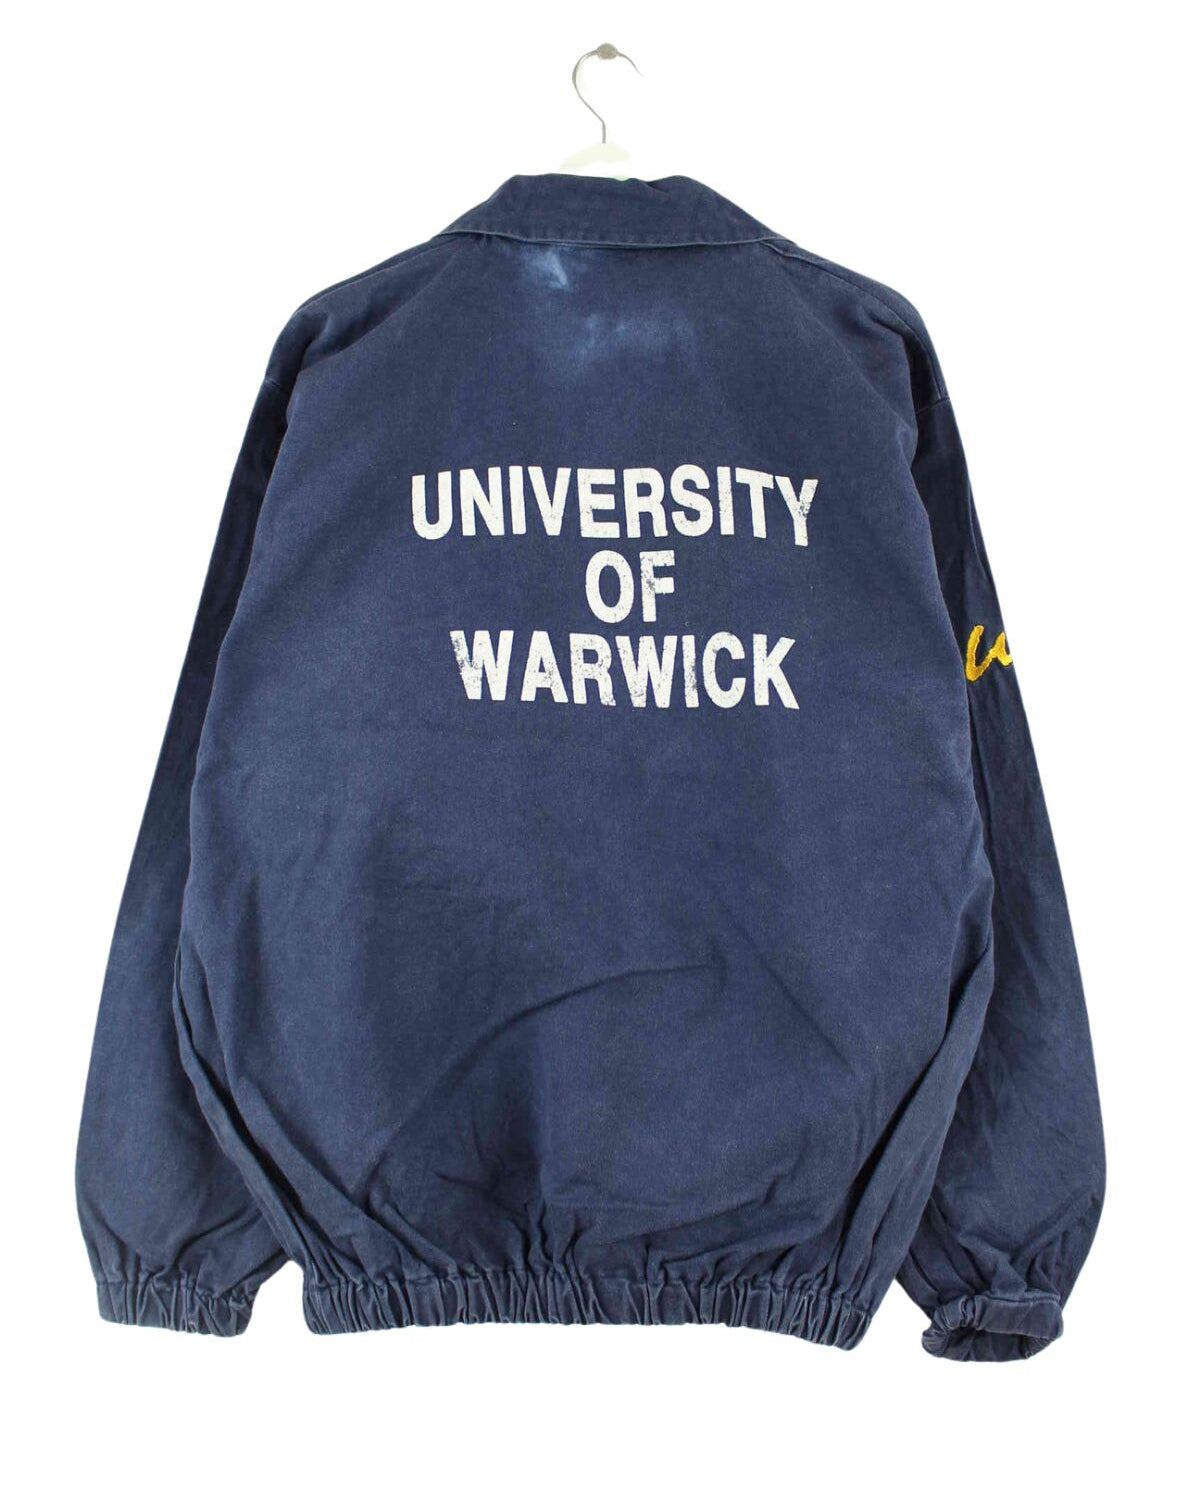 Vintage 90s University Warwick Embroidered Jacke Blau L (back image)